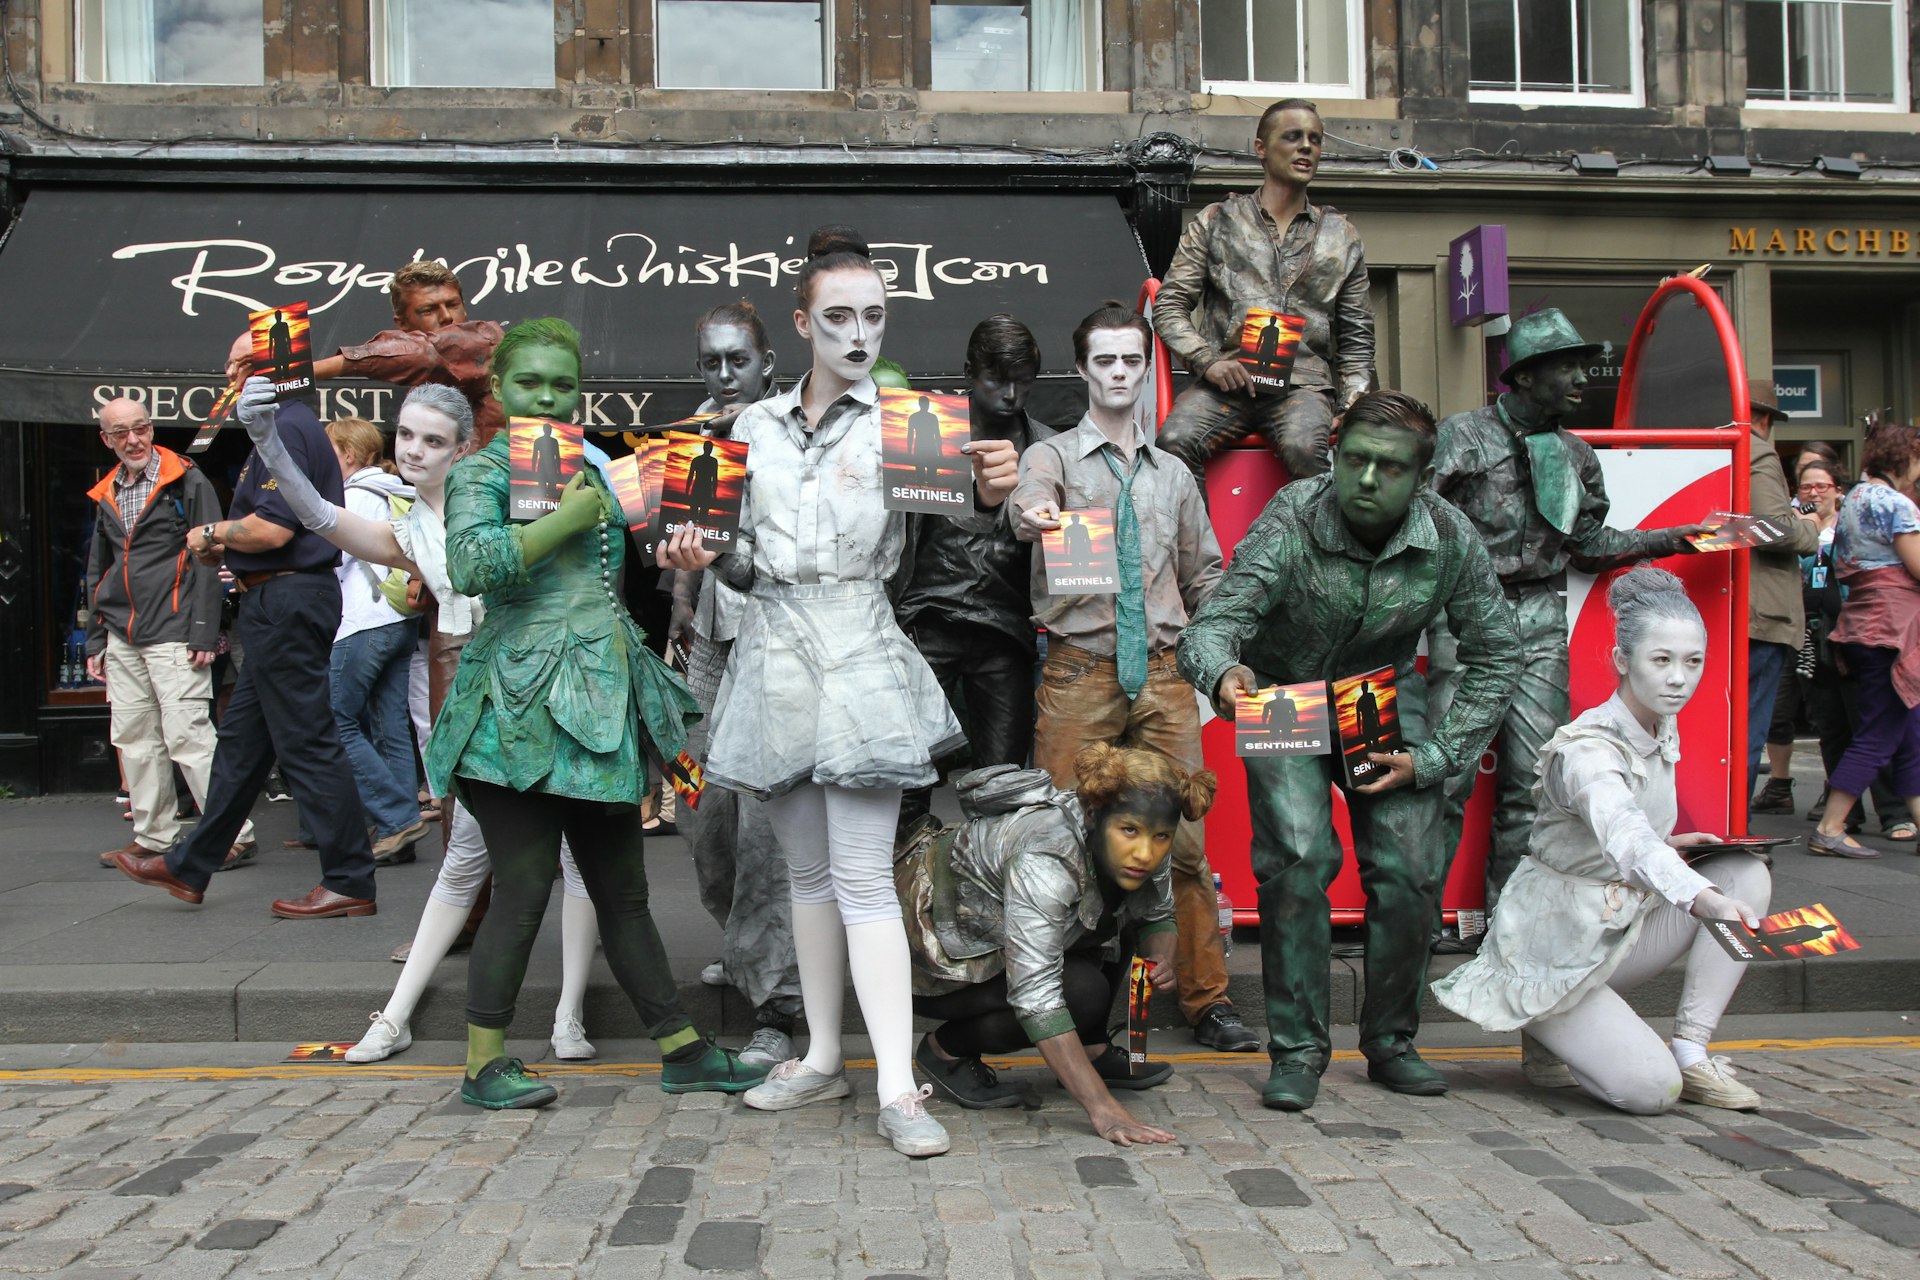 Members of Babolin Theatre publicize their show Sentinels during Edinburgh Fringe Festival on August 10, 2013 in Edinburgh, Scotland